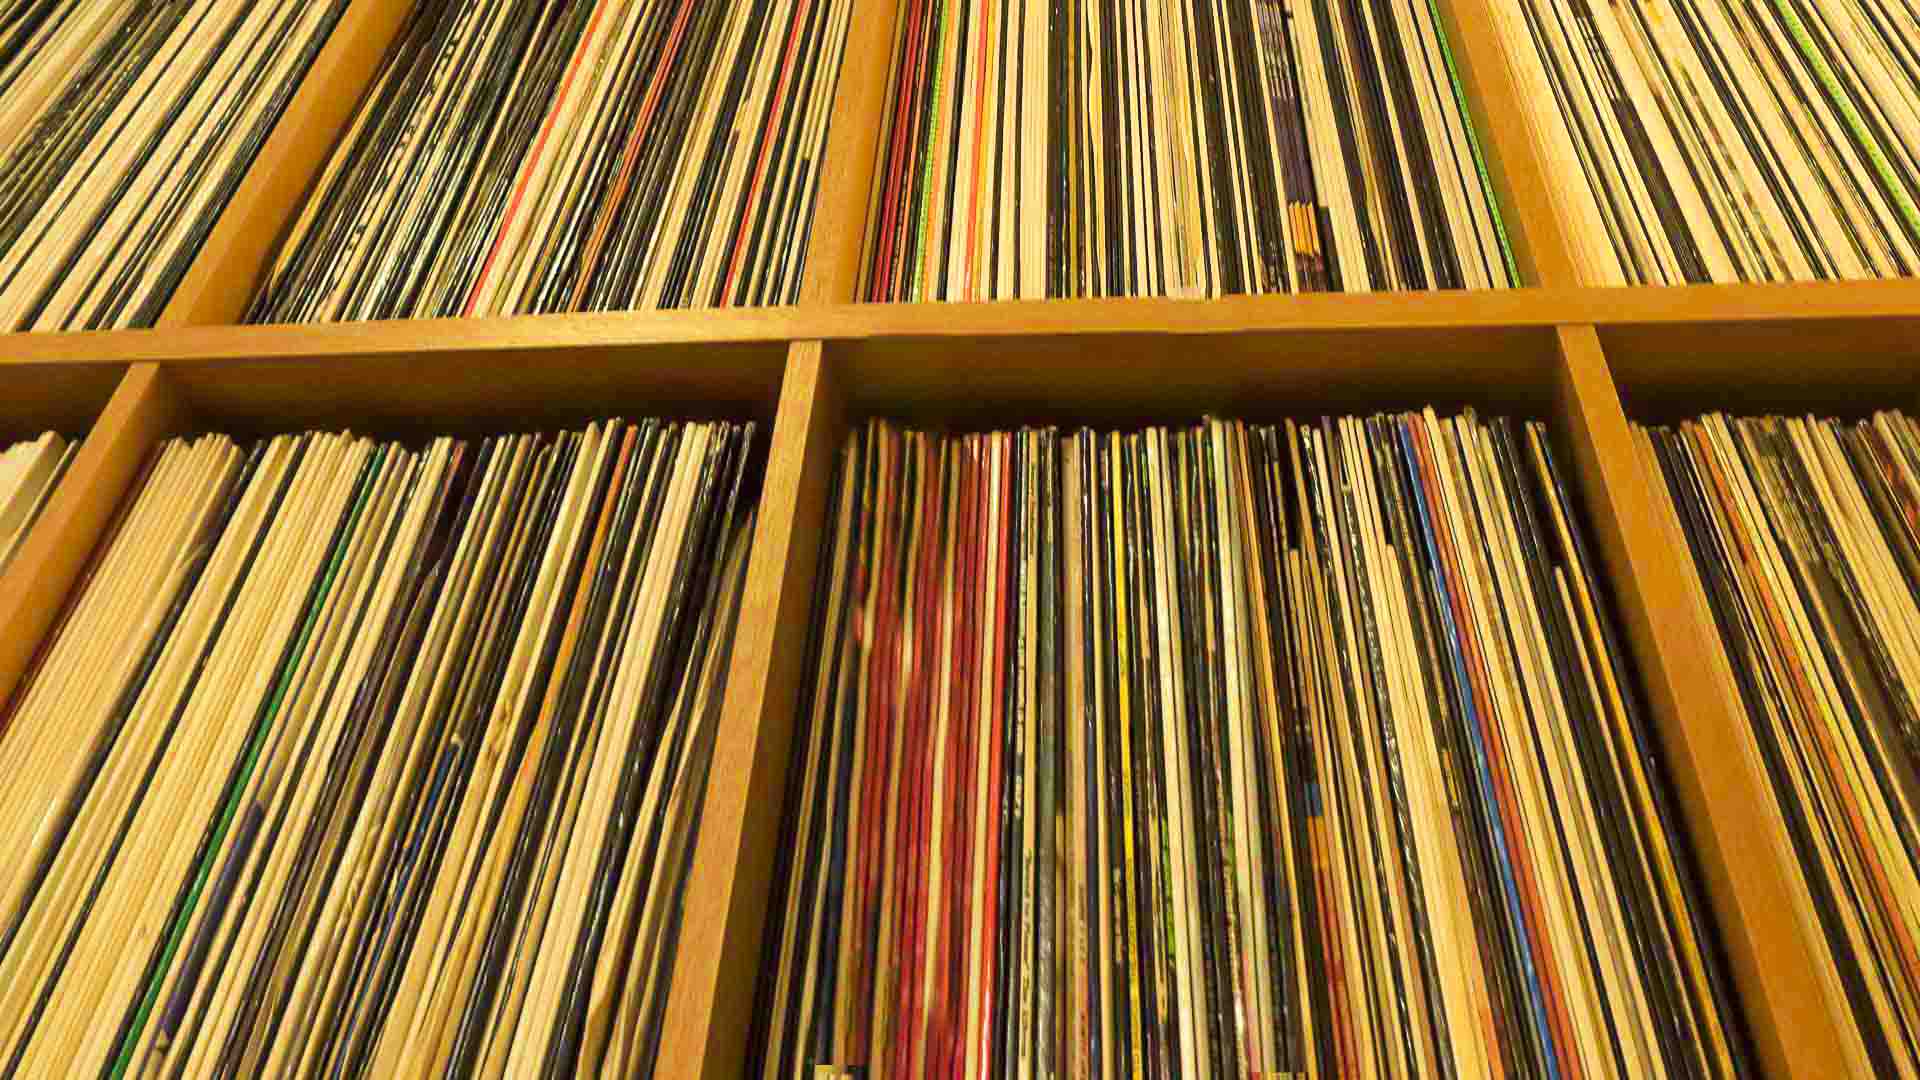 Vinyl record specialists